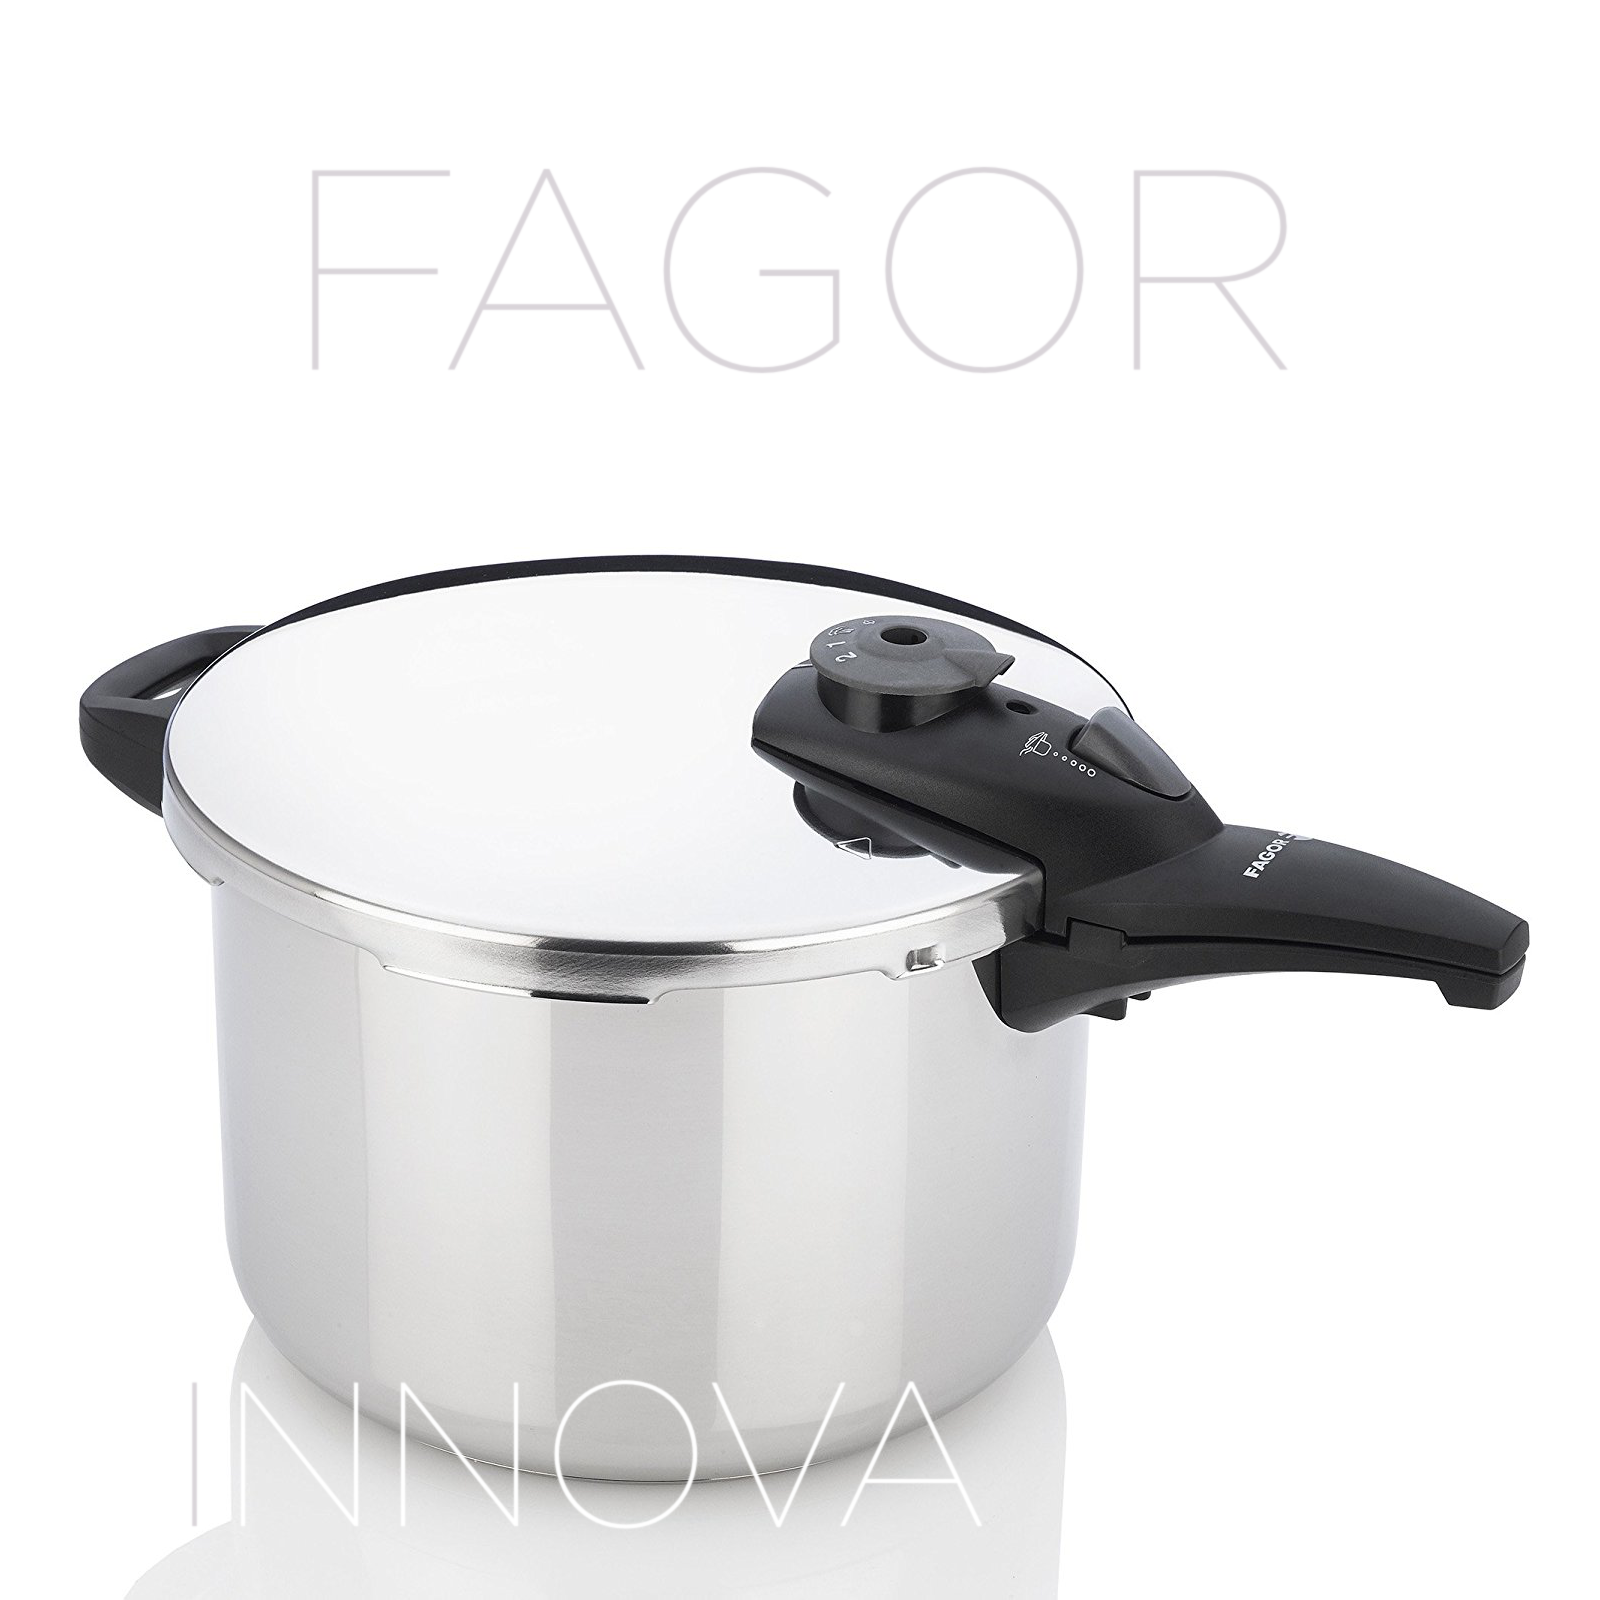  Fagor 3-in-1 6-Quart Multi-Use Pressure Cooker, Slow